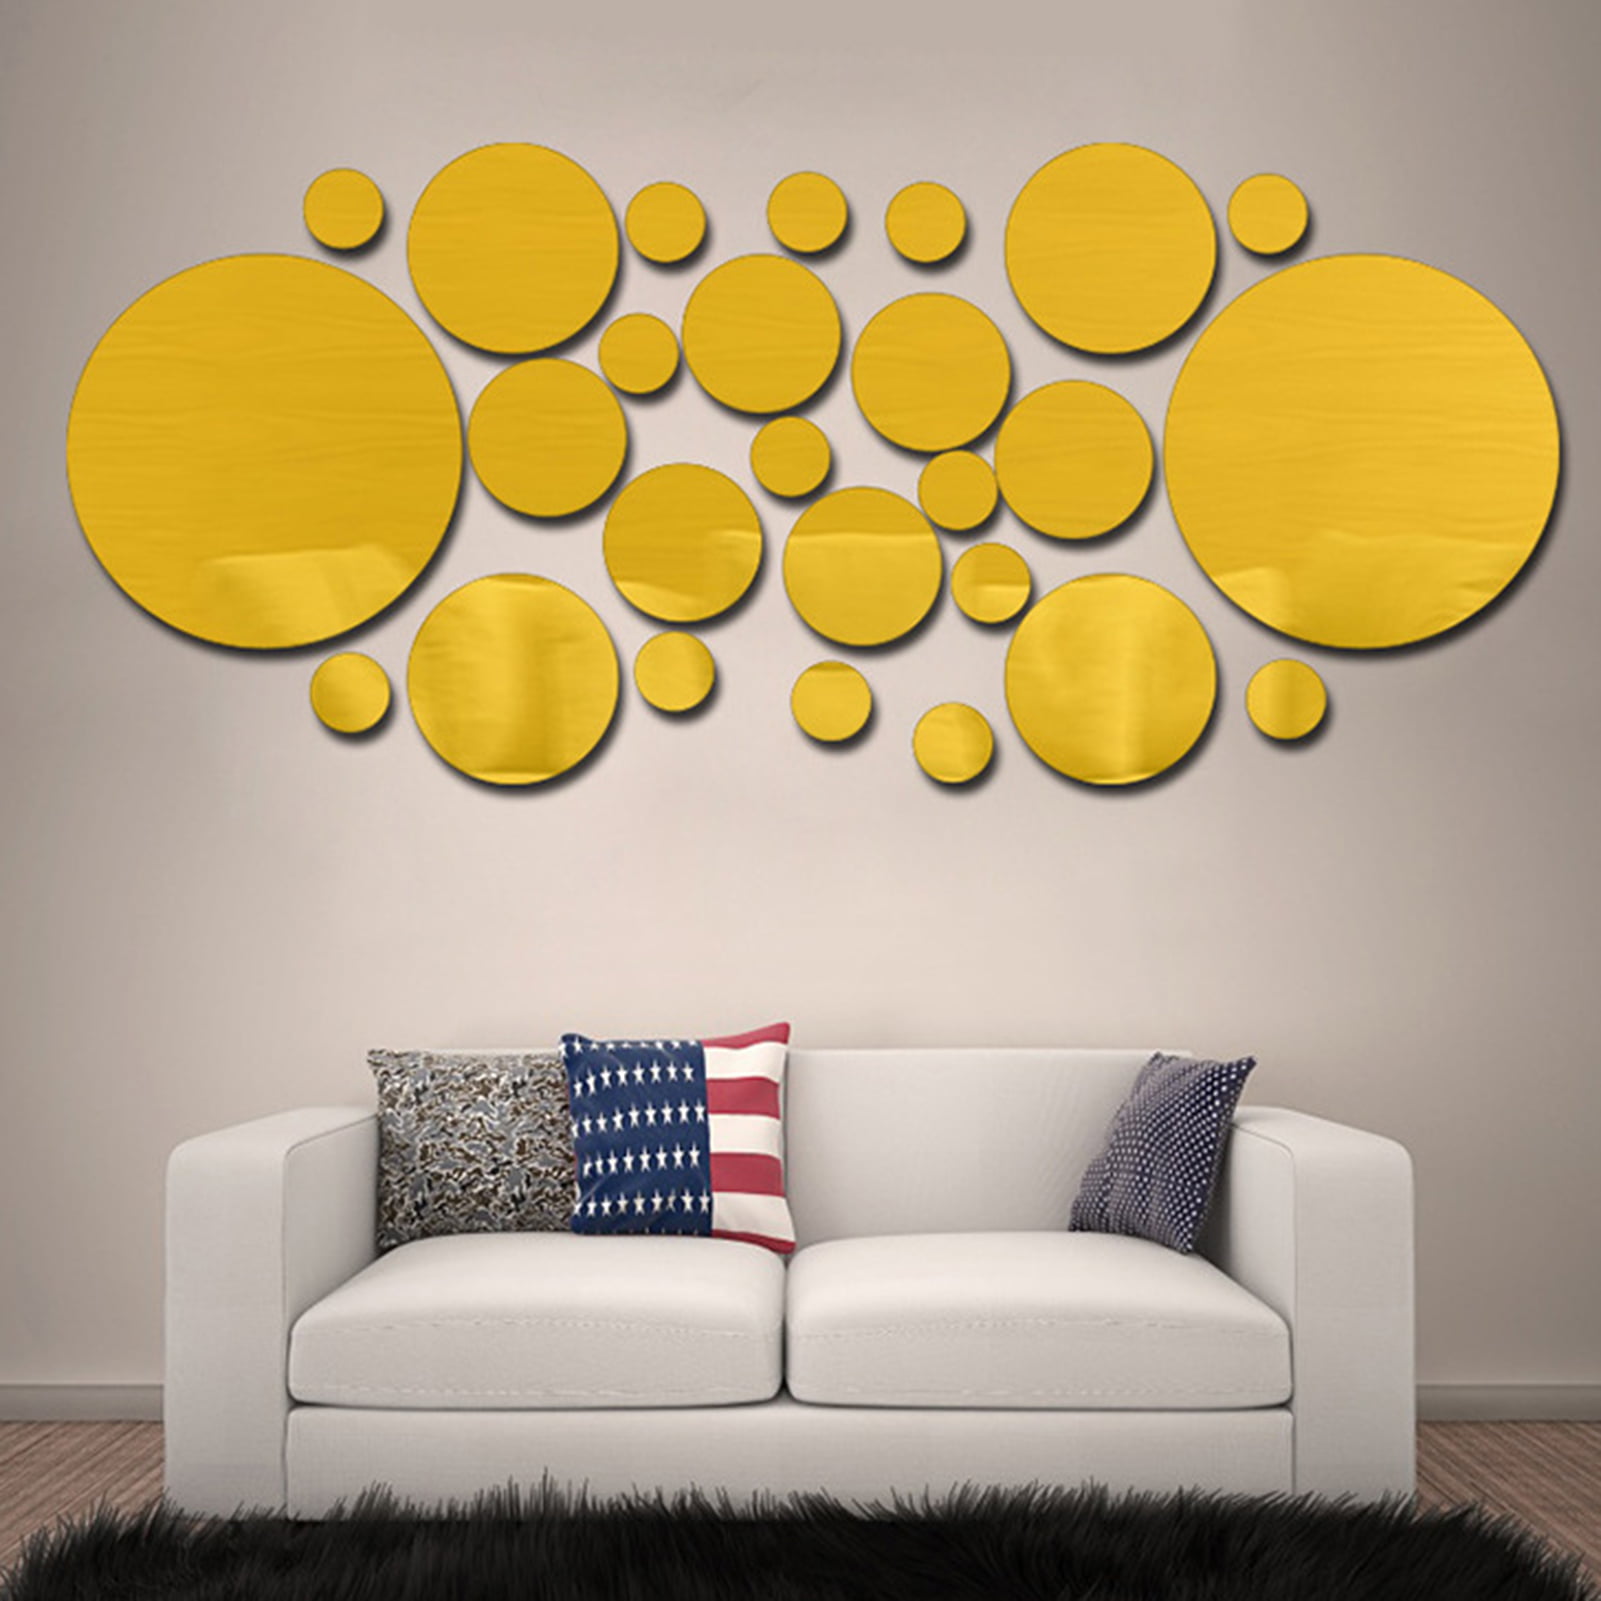 26pcs/Set Circles Mirror Wall Stickers Home Room Mural Art DIY Decorations Decal